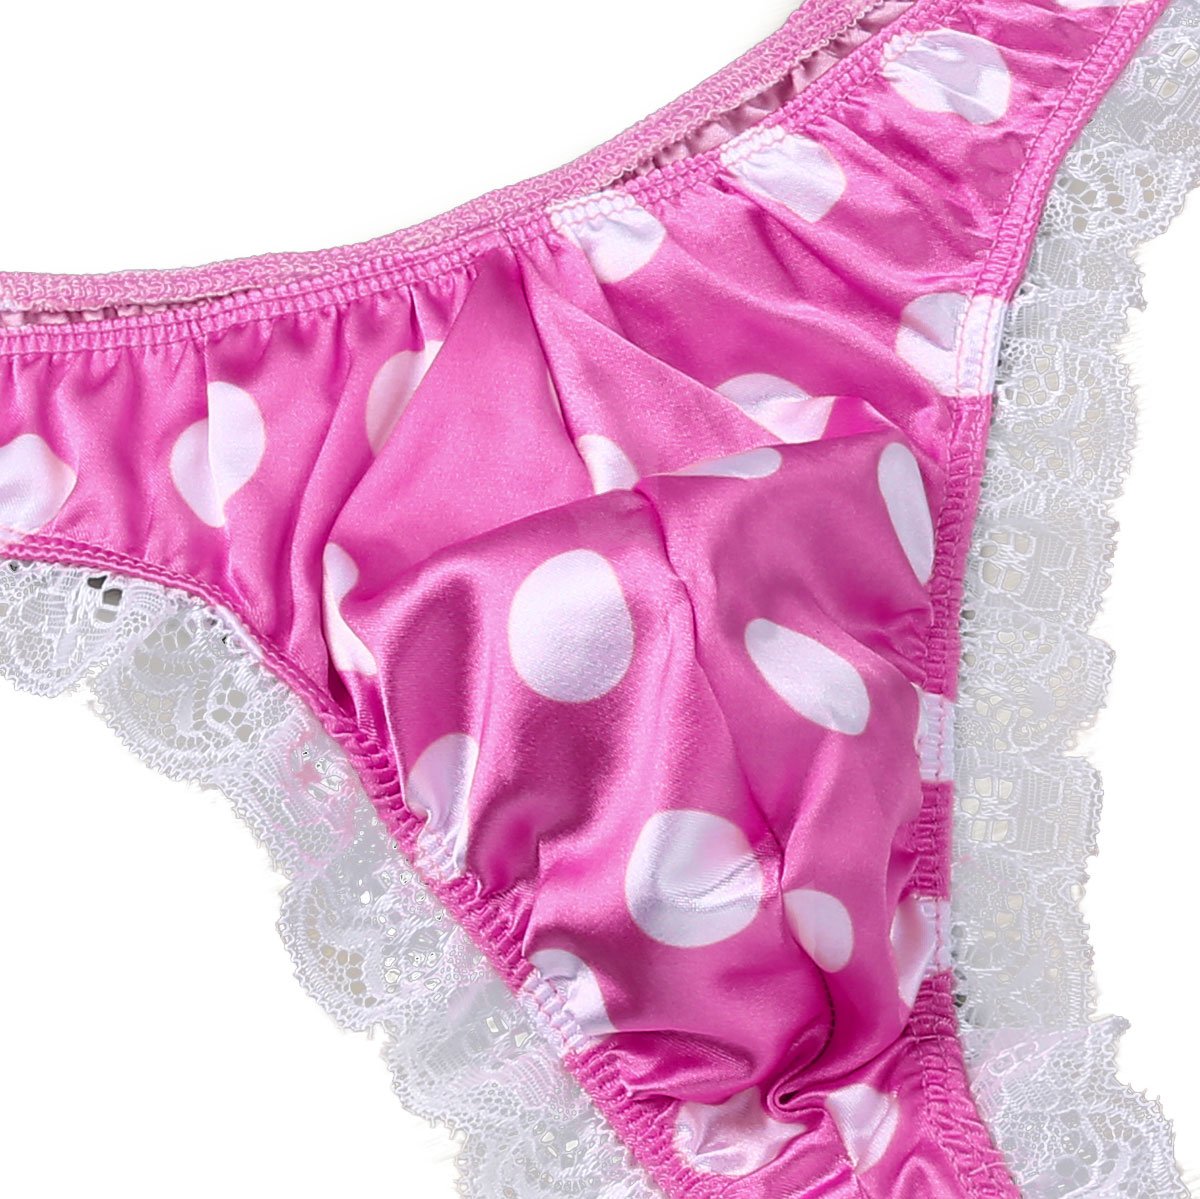 ACSUSS Mens Shiny Satin Pouch Panties Lingerie Polka Dots Crossdress Sissy Underwear